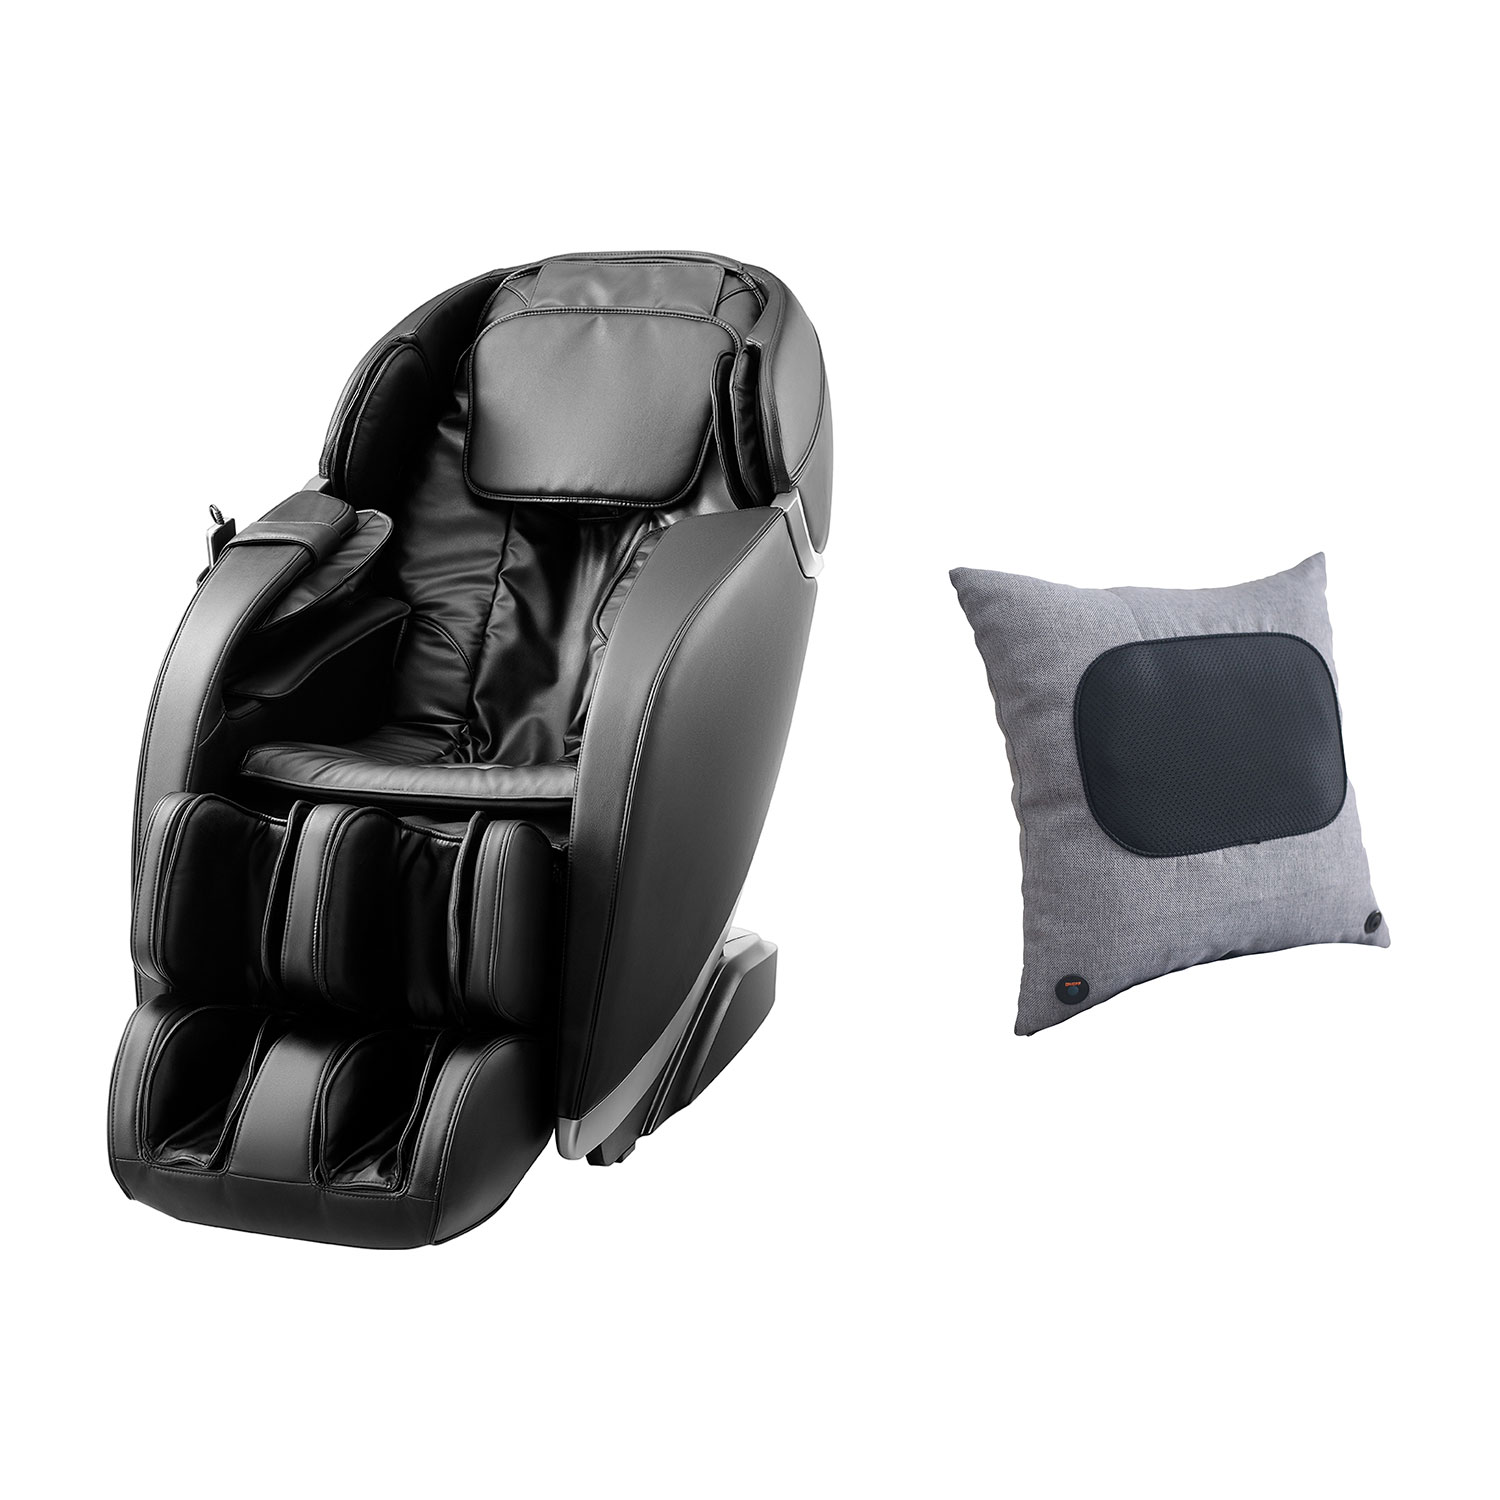 Insignia 2D Zero Gravity Full Body Massage Chair with Massaging Pillow - Black/Silver Trim